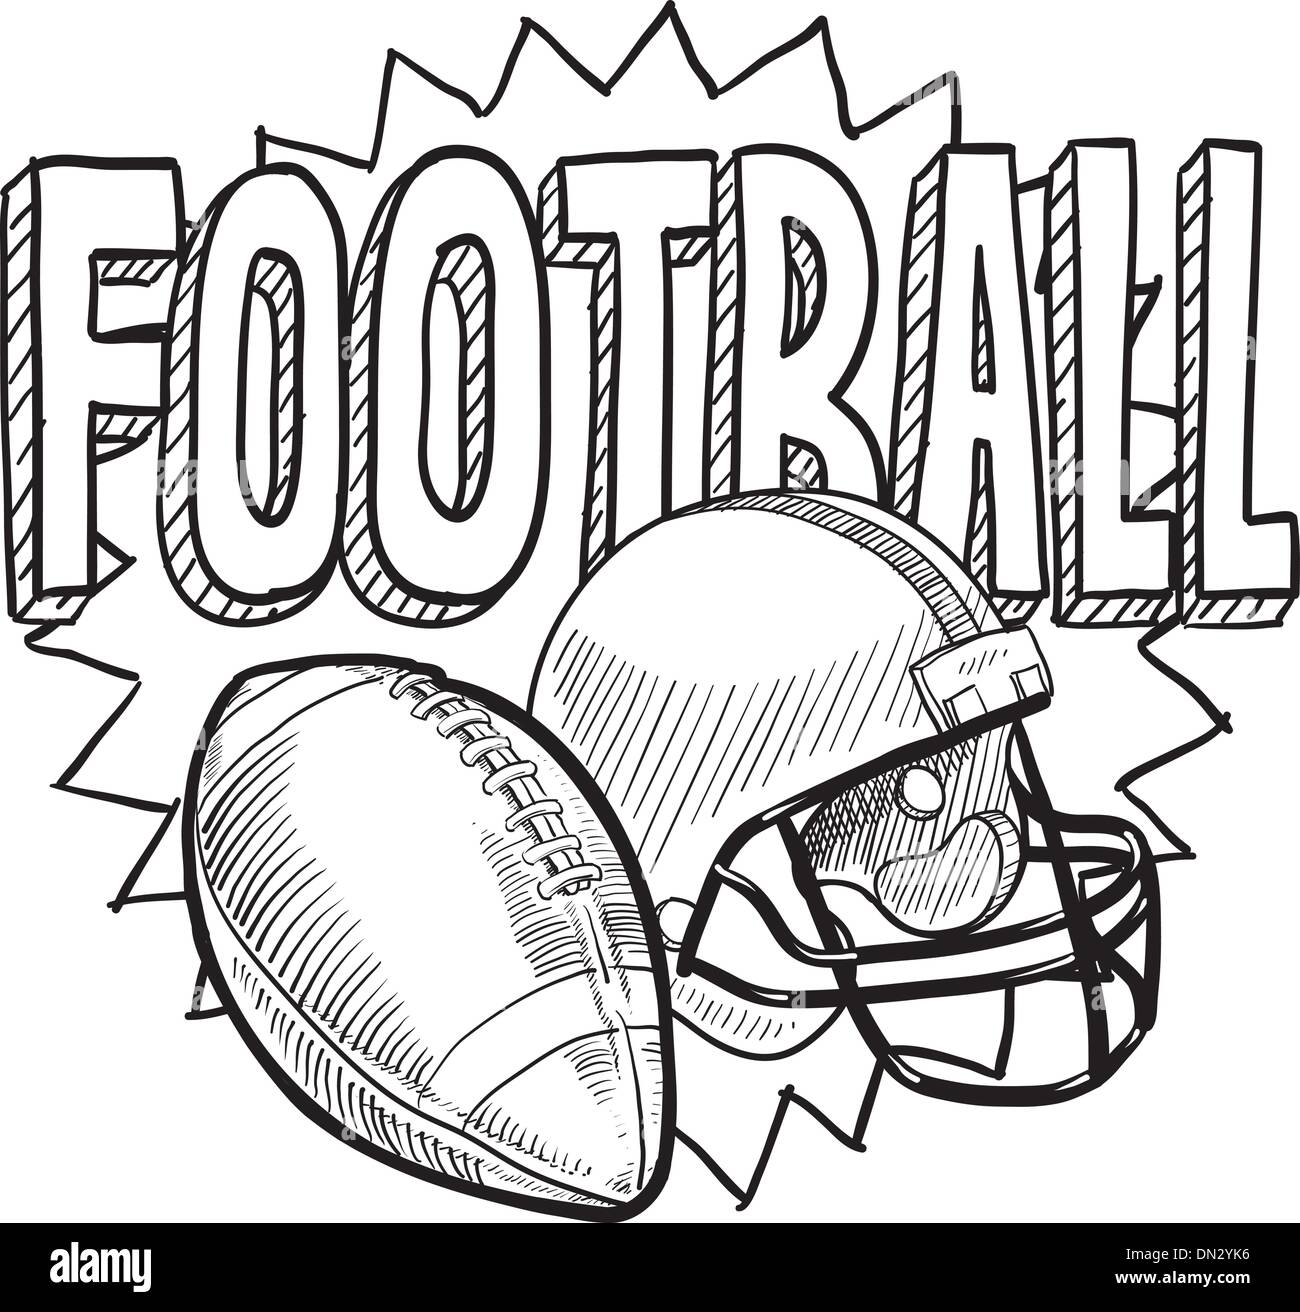 football player helmet drawing